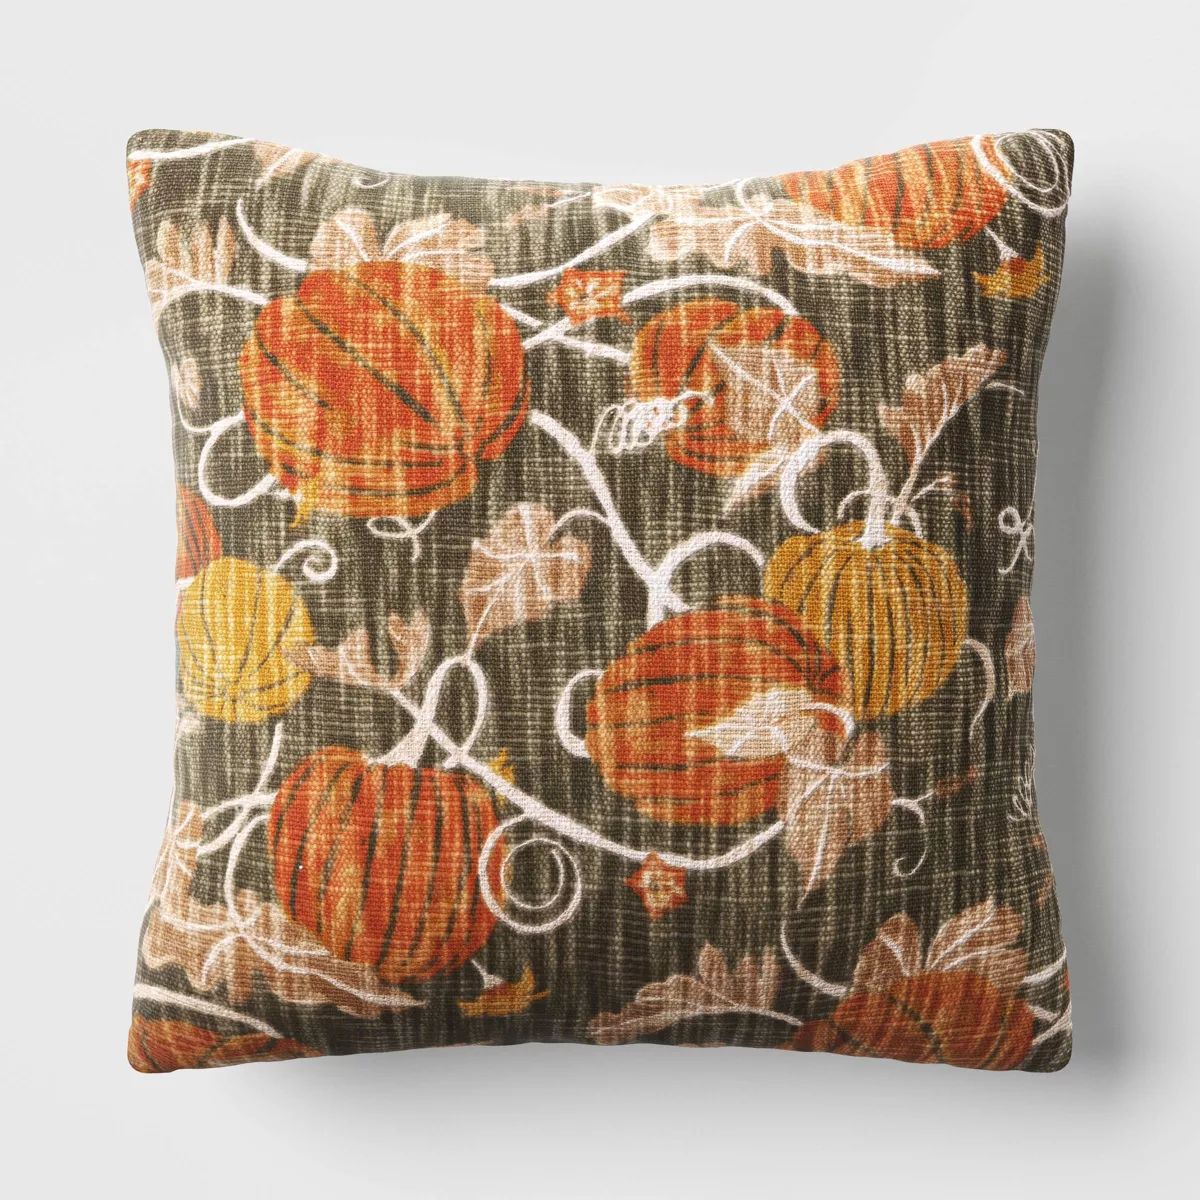 Printed Pumpkin Square Throw Pillow - Threshold™ | Target